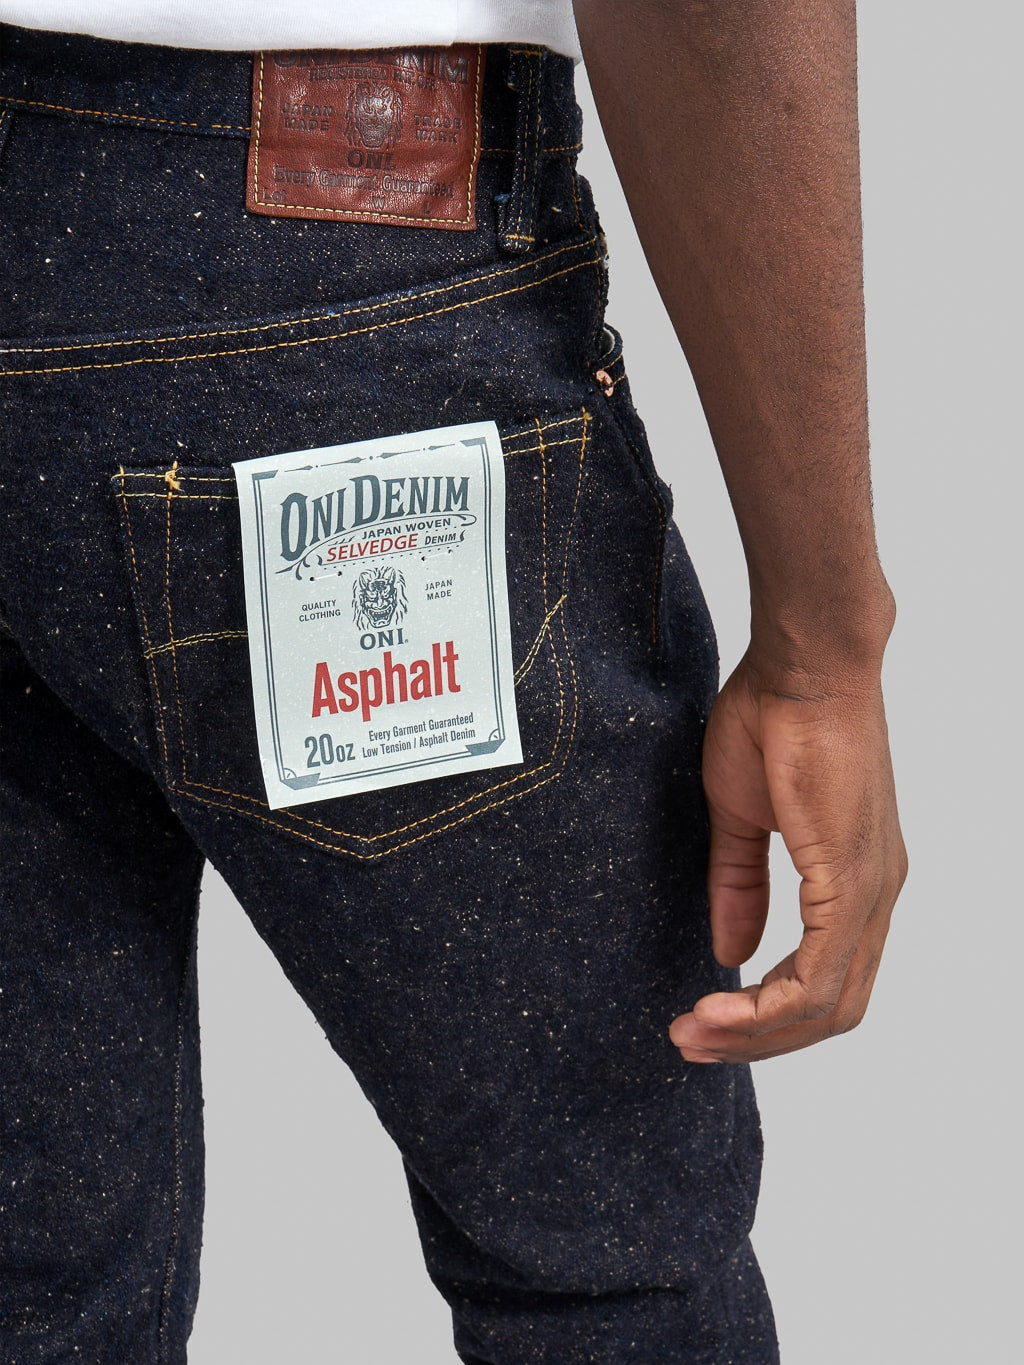 ONI Denim 902 "Asphalt" 20oz High Rise Relaxed Tapered Jeans